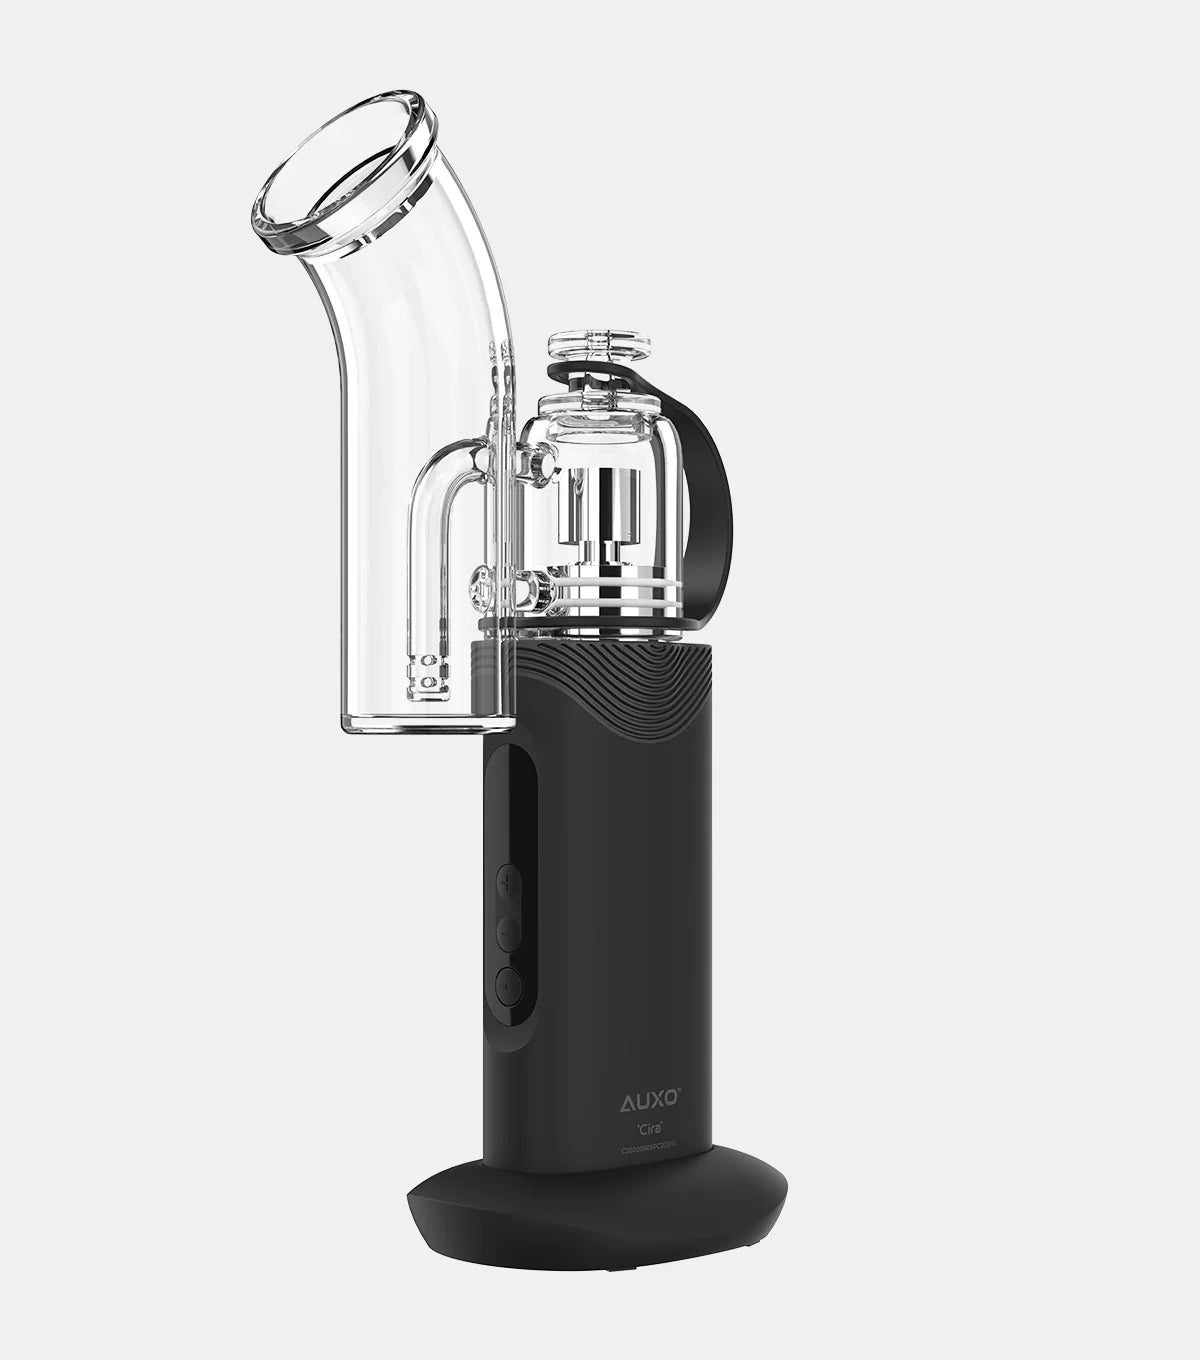 AUXO Cira Vaporizer in Black - Portable Aluminum & Borosilicate Glass Design for Concentrates, Side View